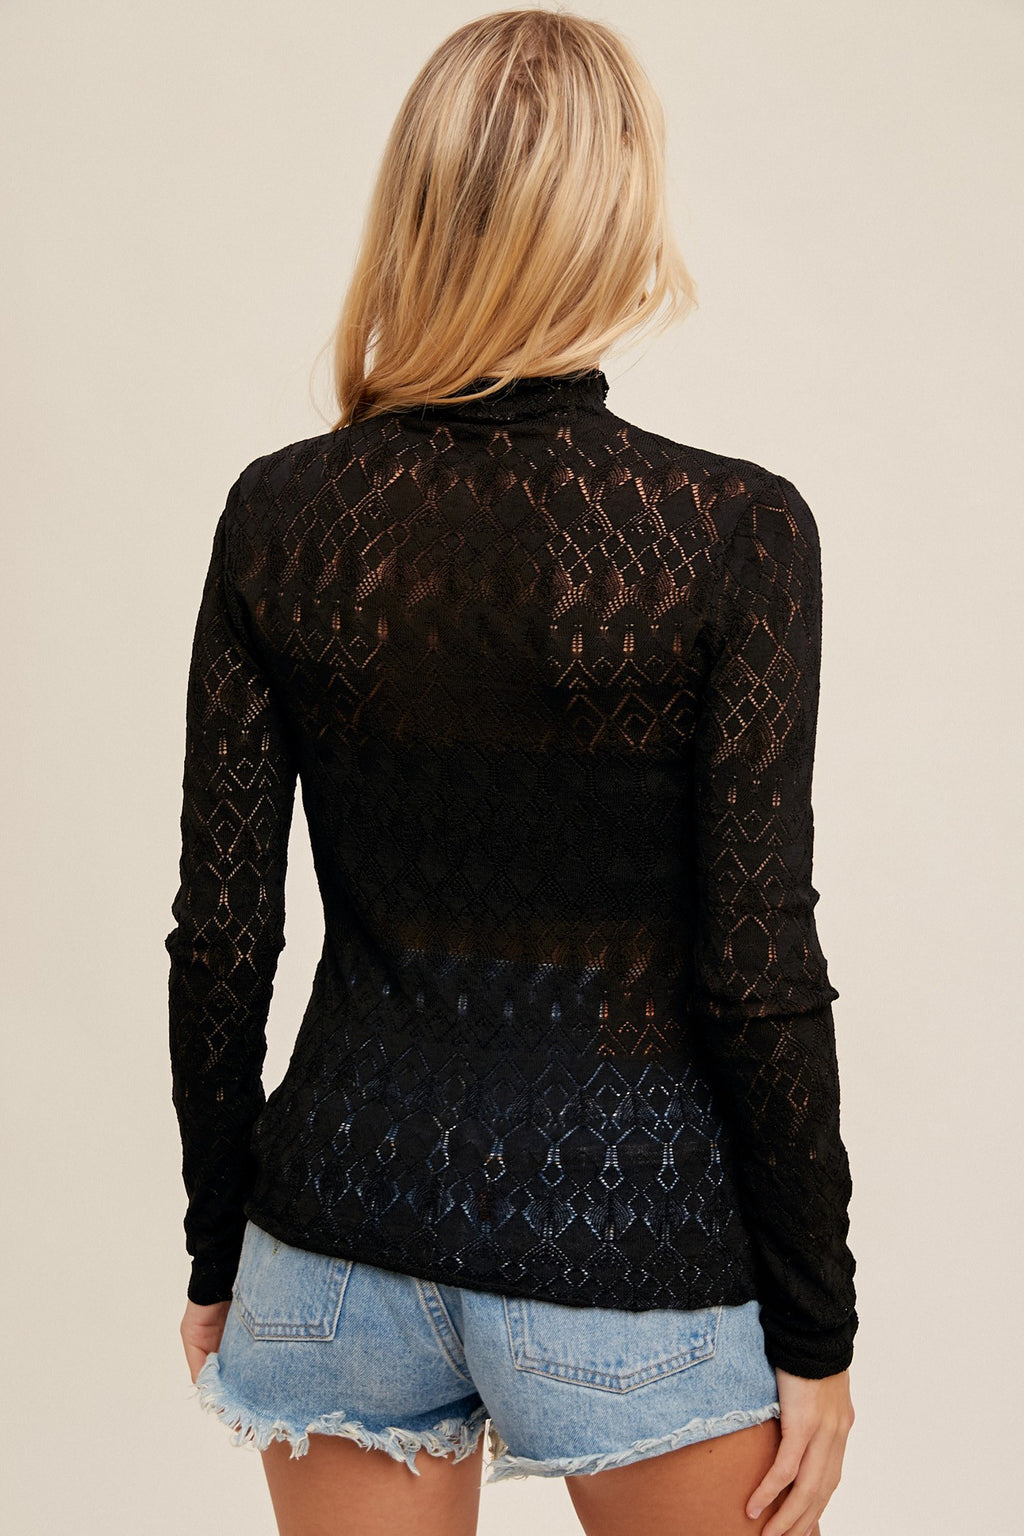 Lillian Mock Neck Pointelle Spring Sweater in Black by Hem & Thread